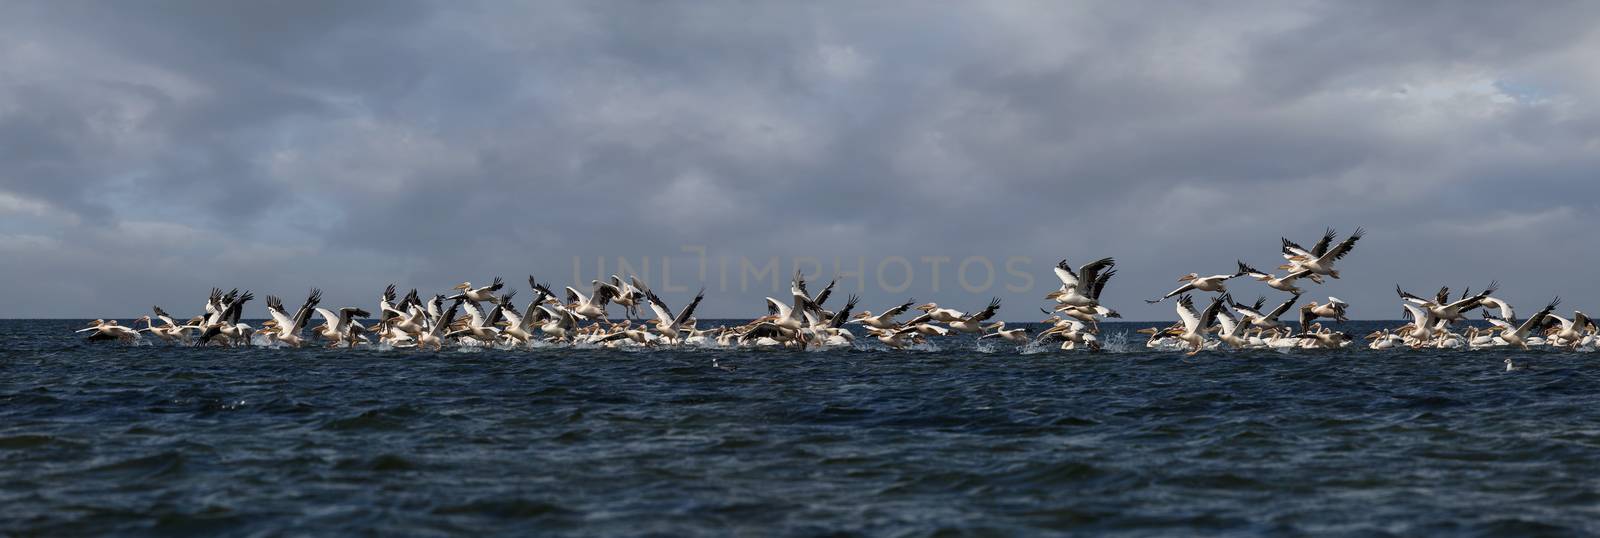 soaring flock of pink pelicans by fogen